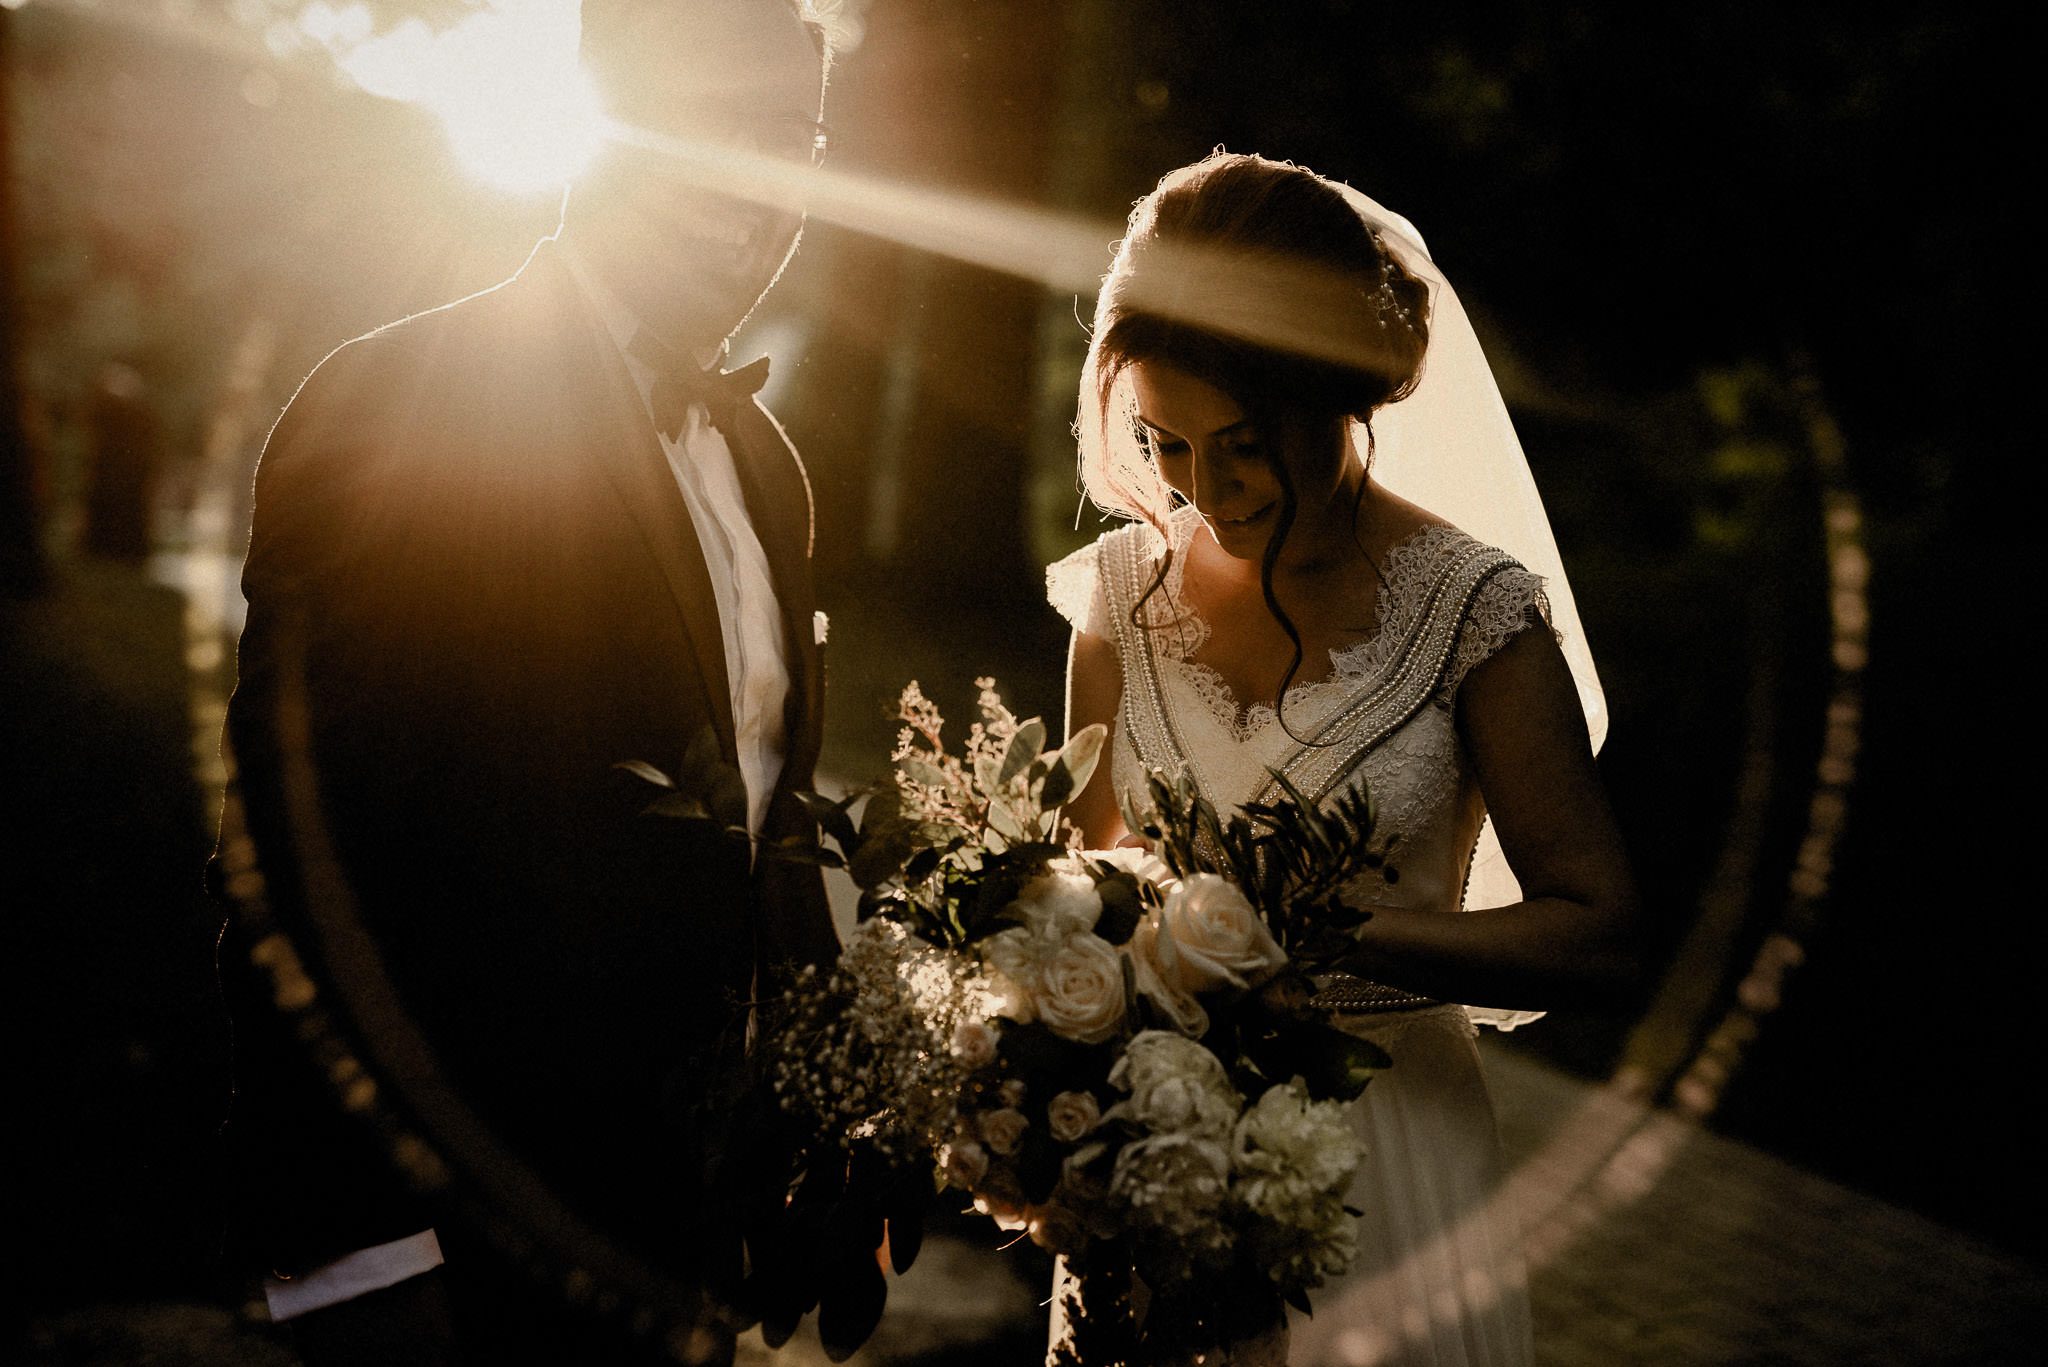 documentary wedding photographer based in porto portugal